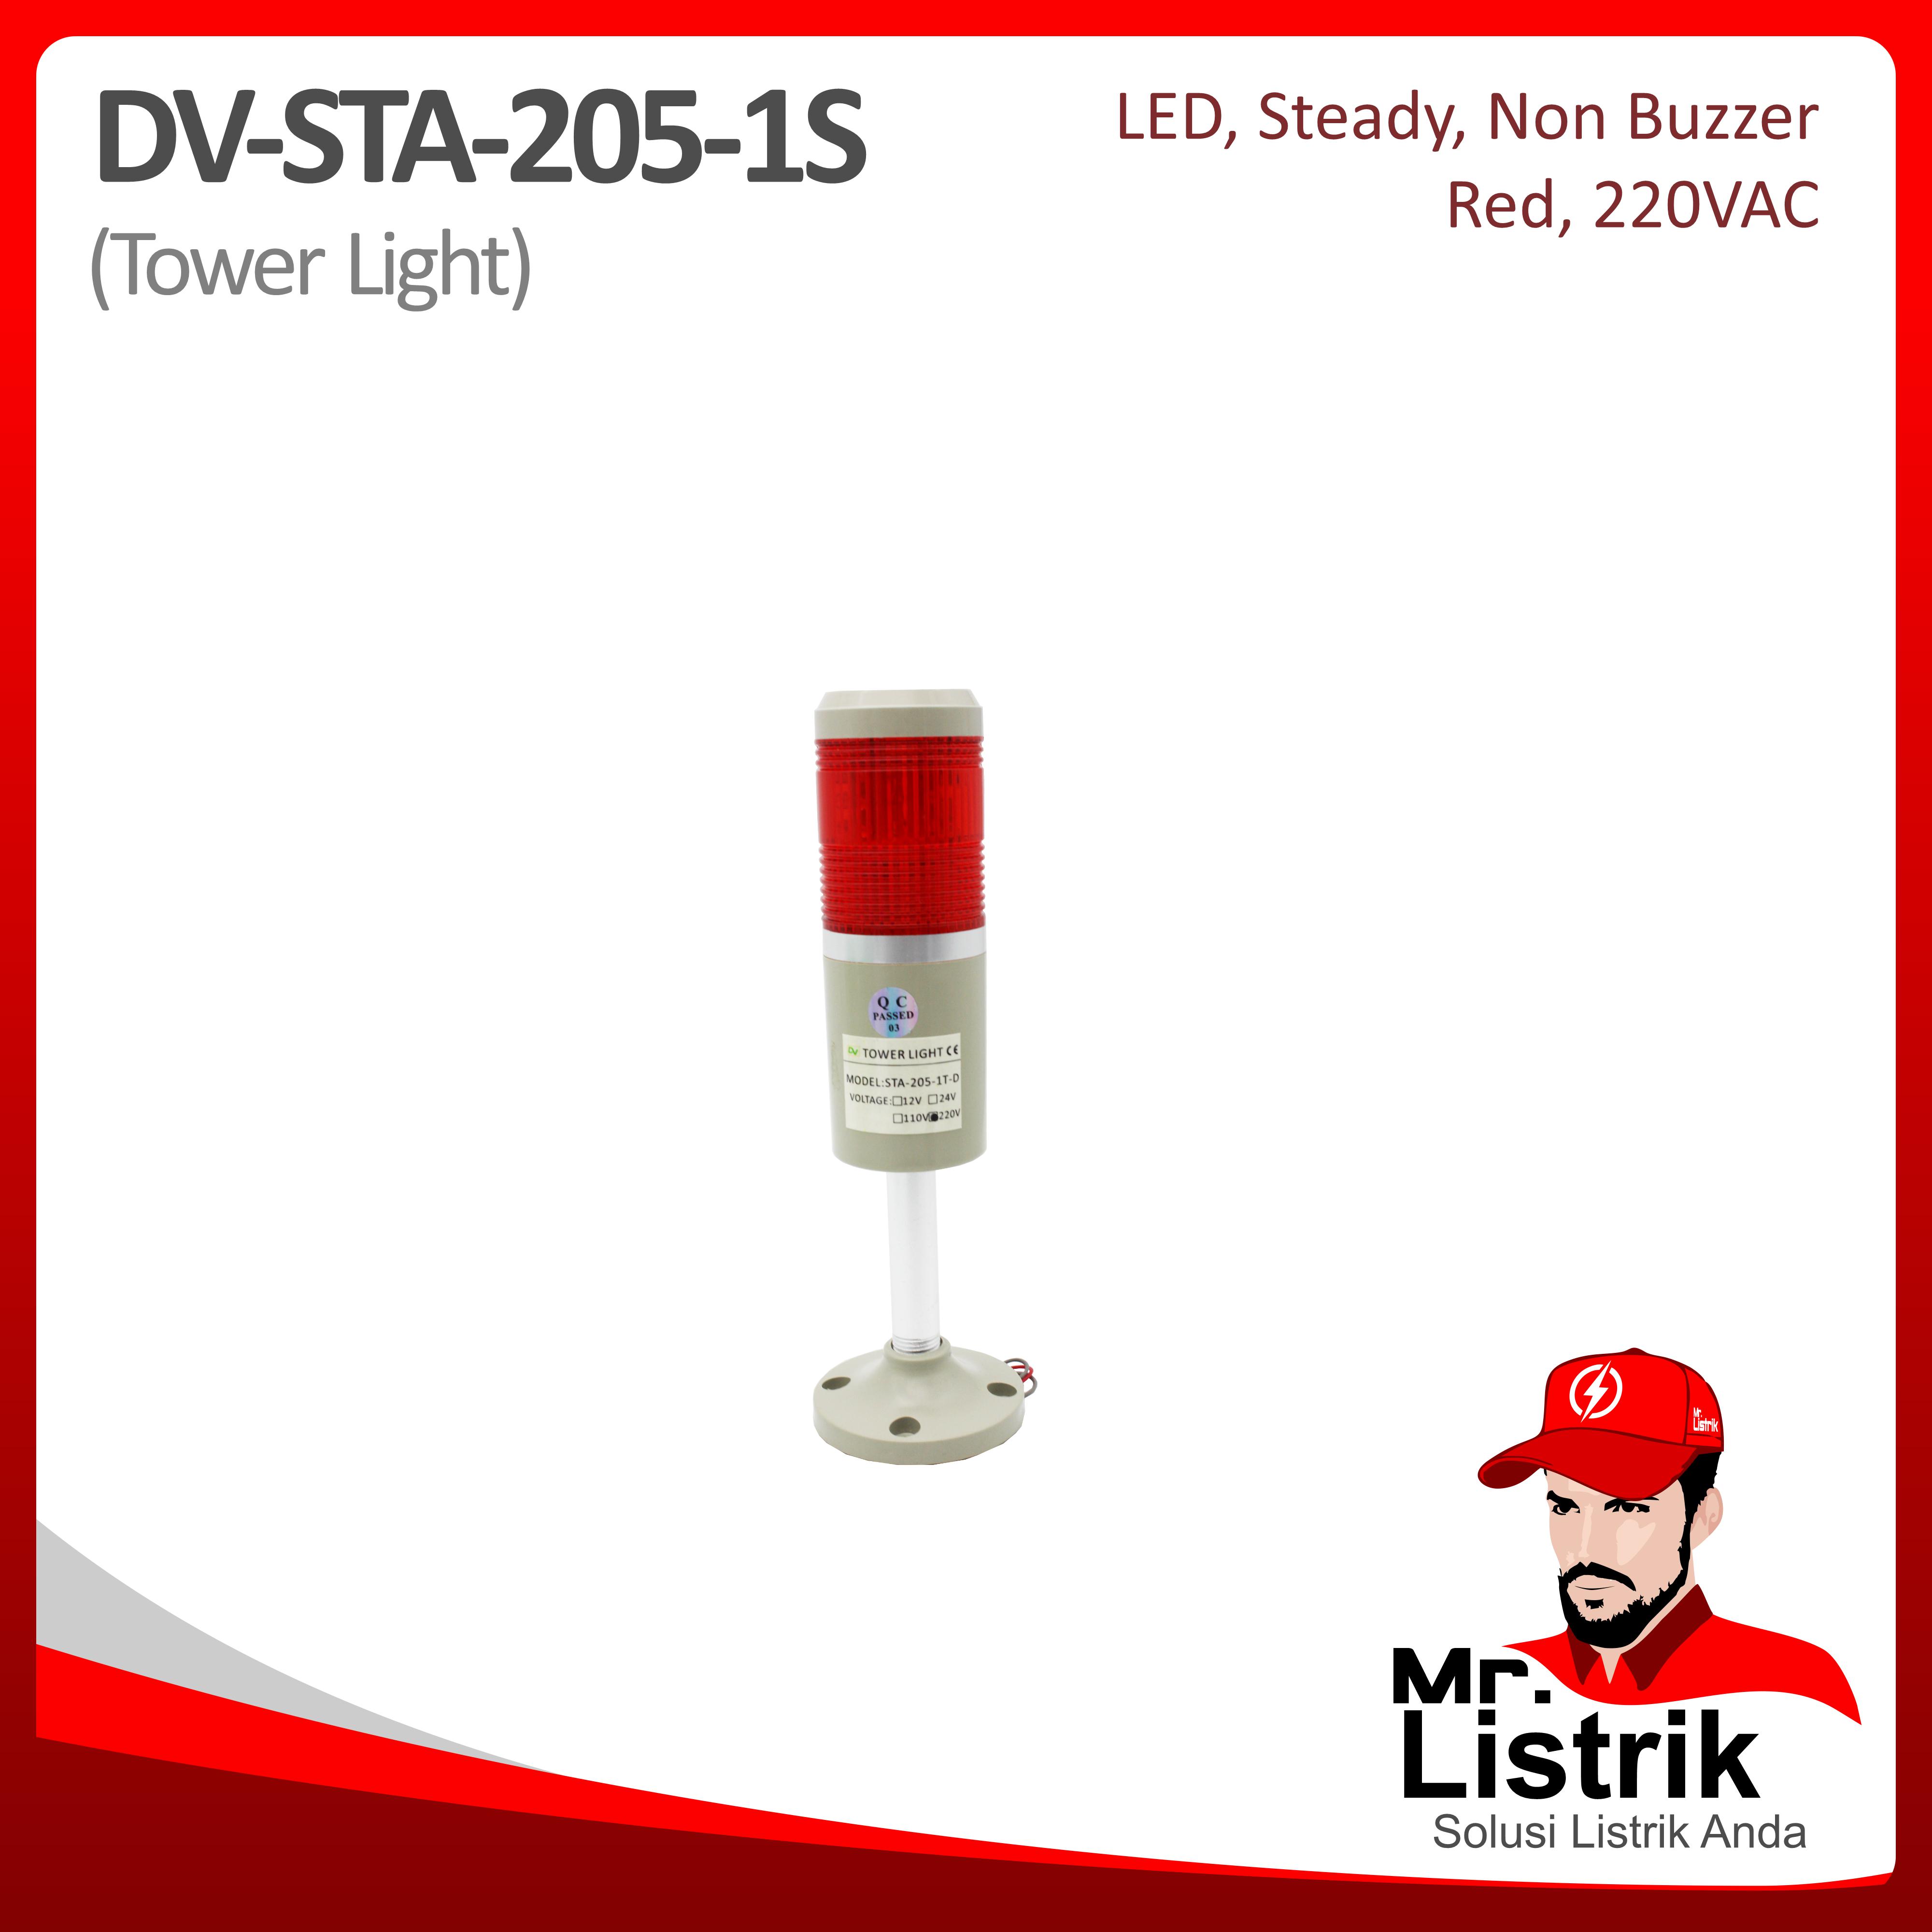 Tower Light LED Steady Red DV STA-205-1S